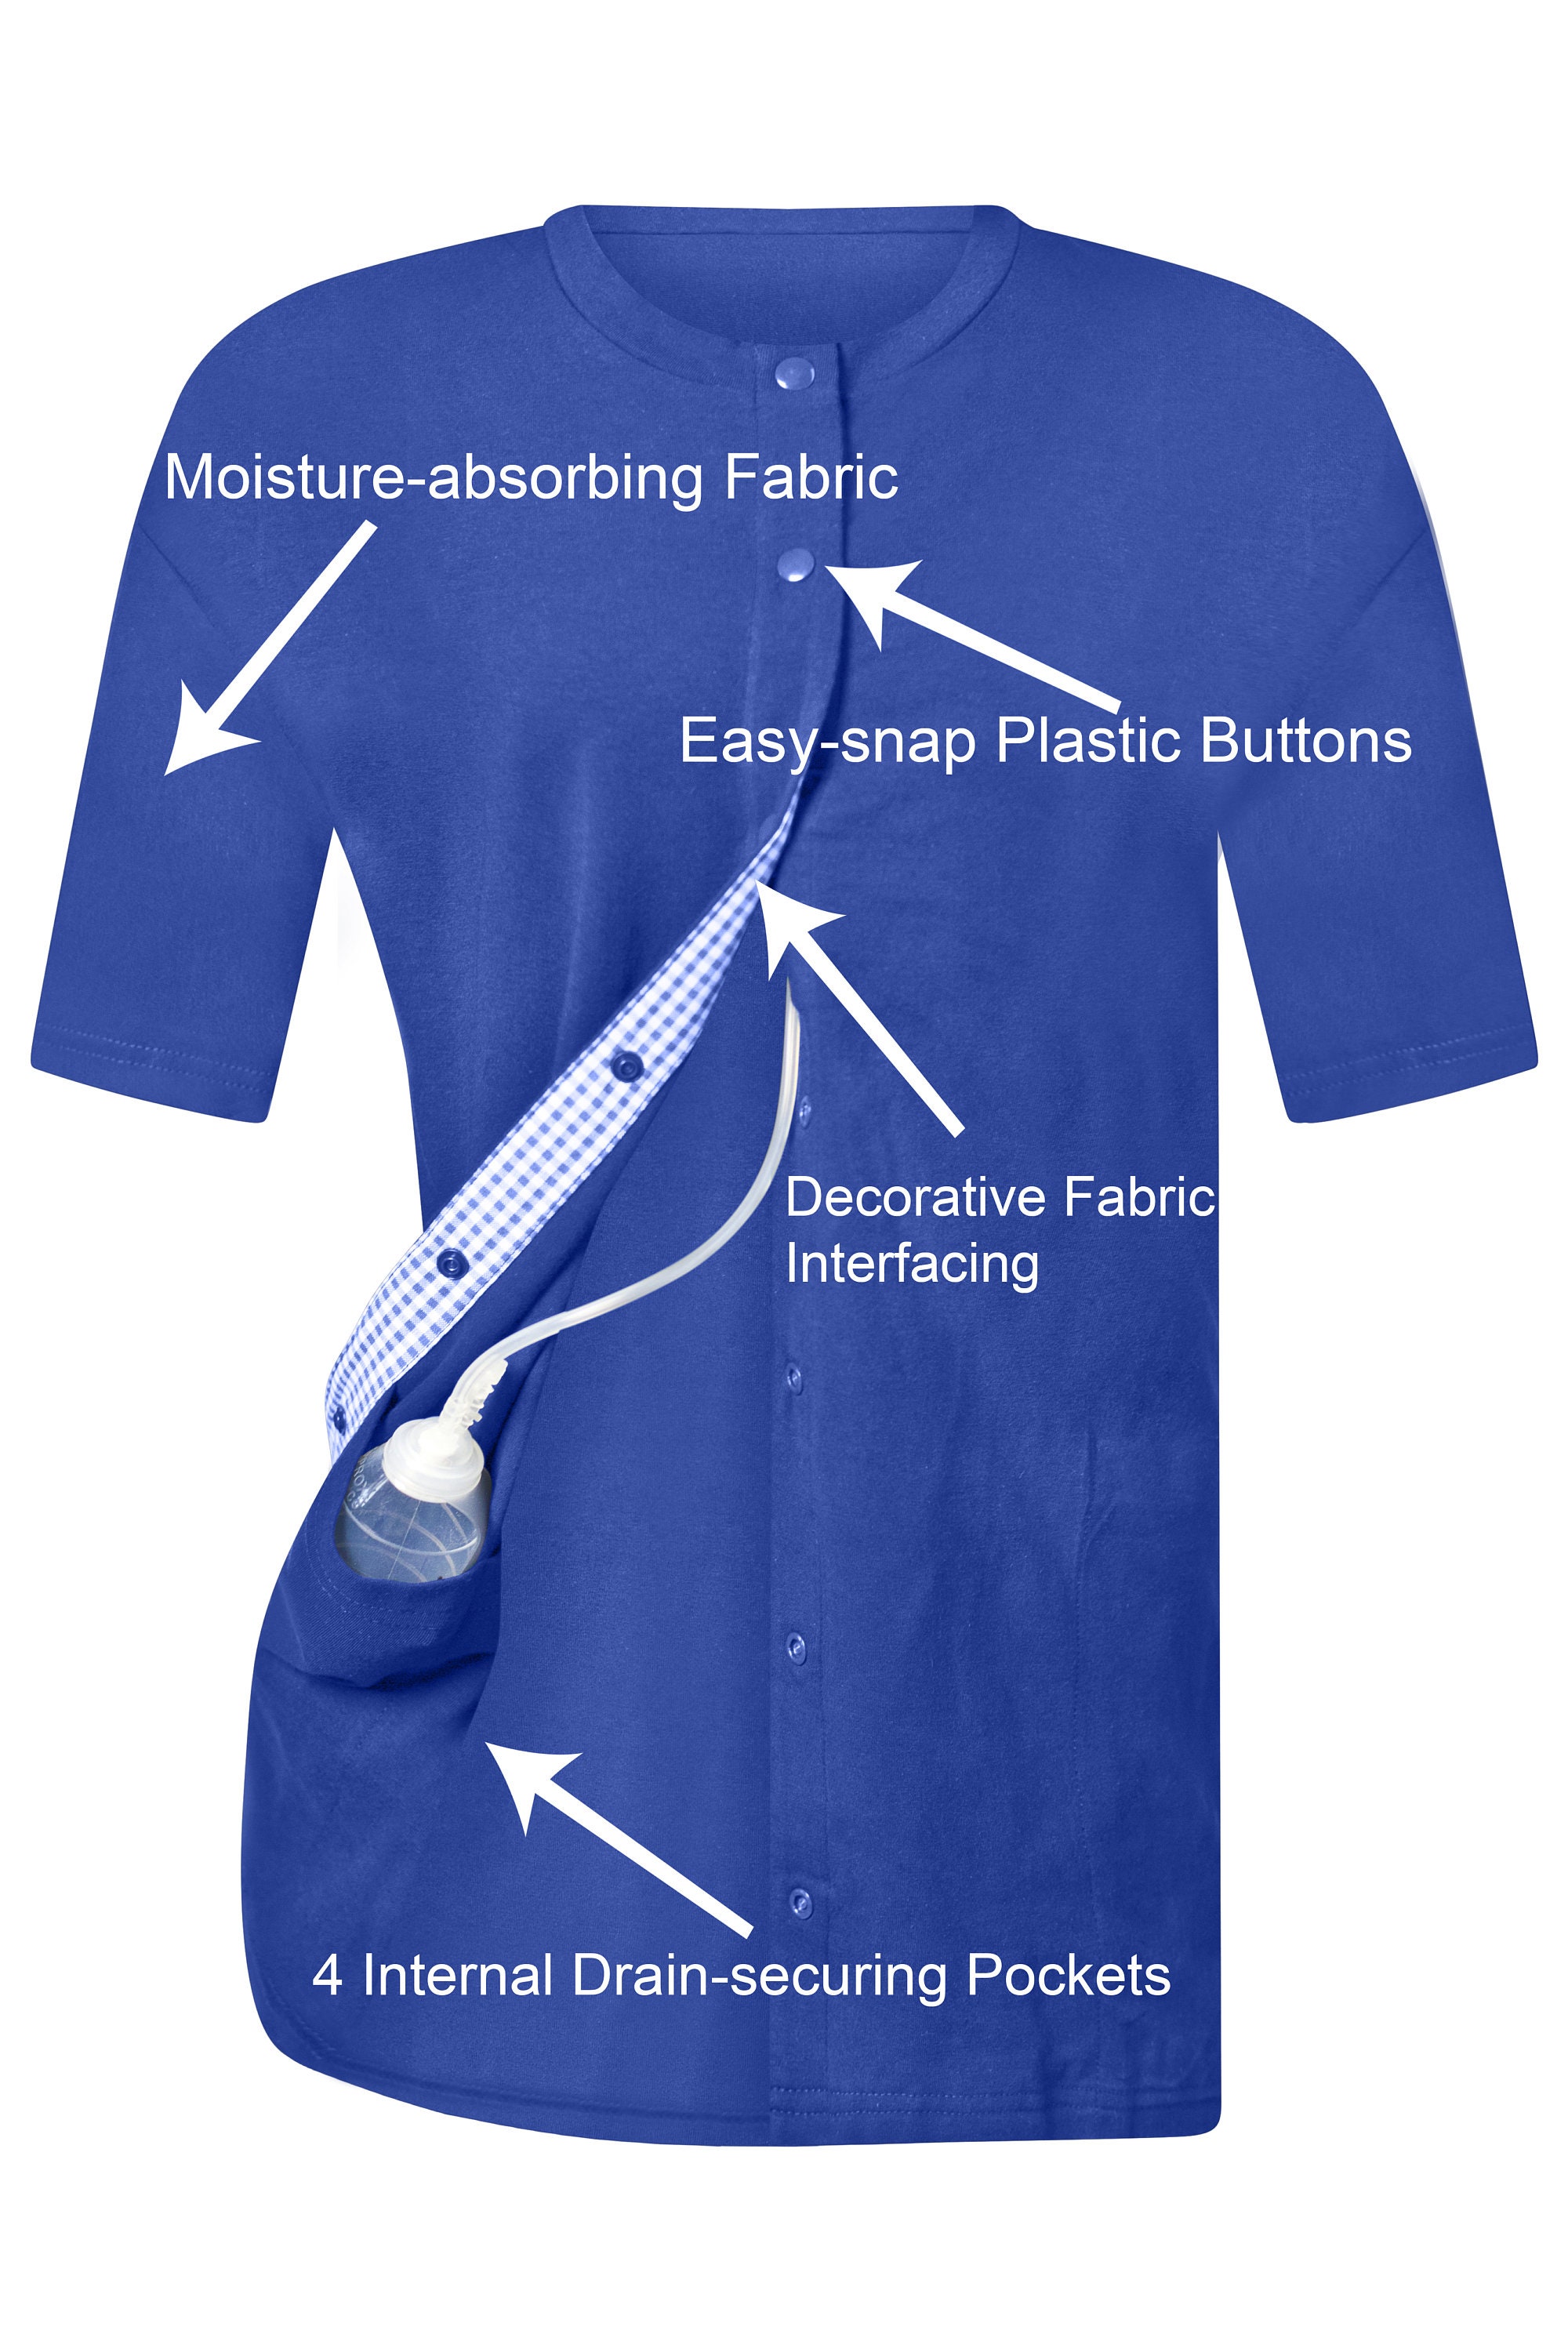 Kleding Dameskleding Tops & T-shirts Blouses Mastectomie Herstel Shirt met Drain Pockets 